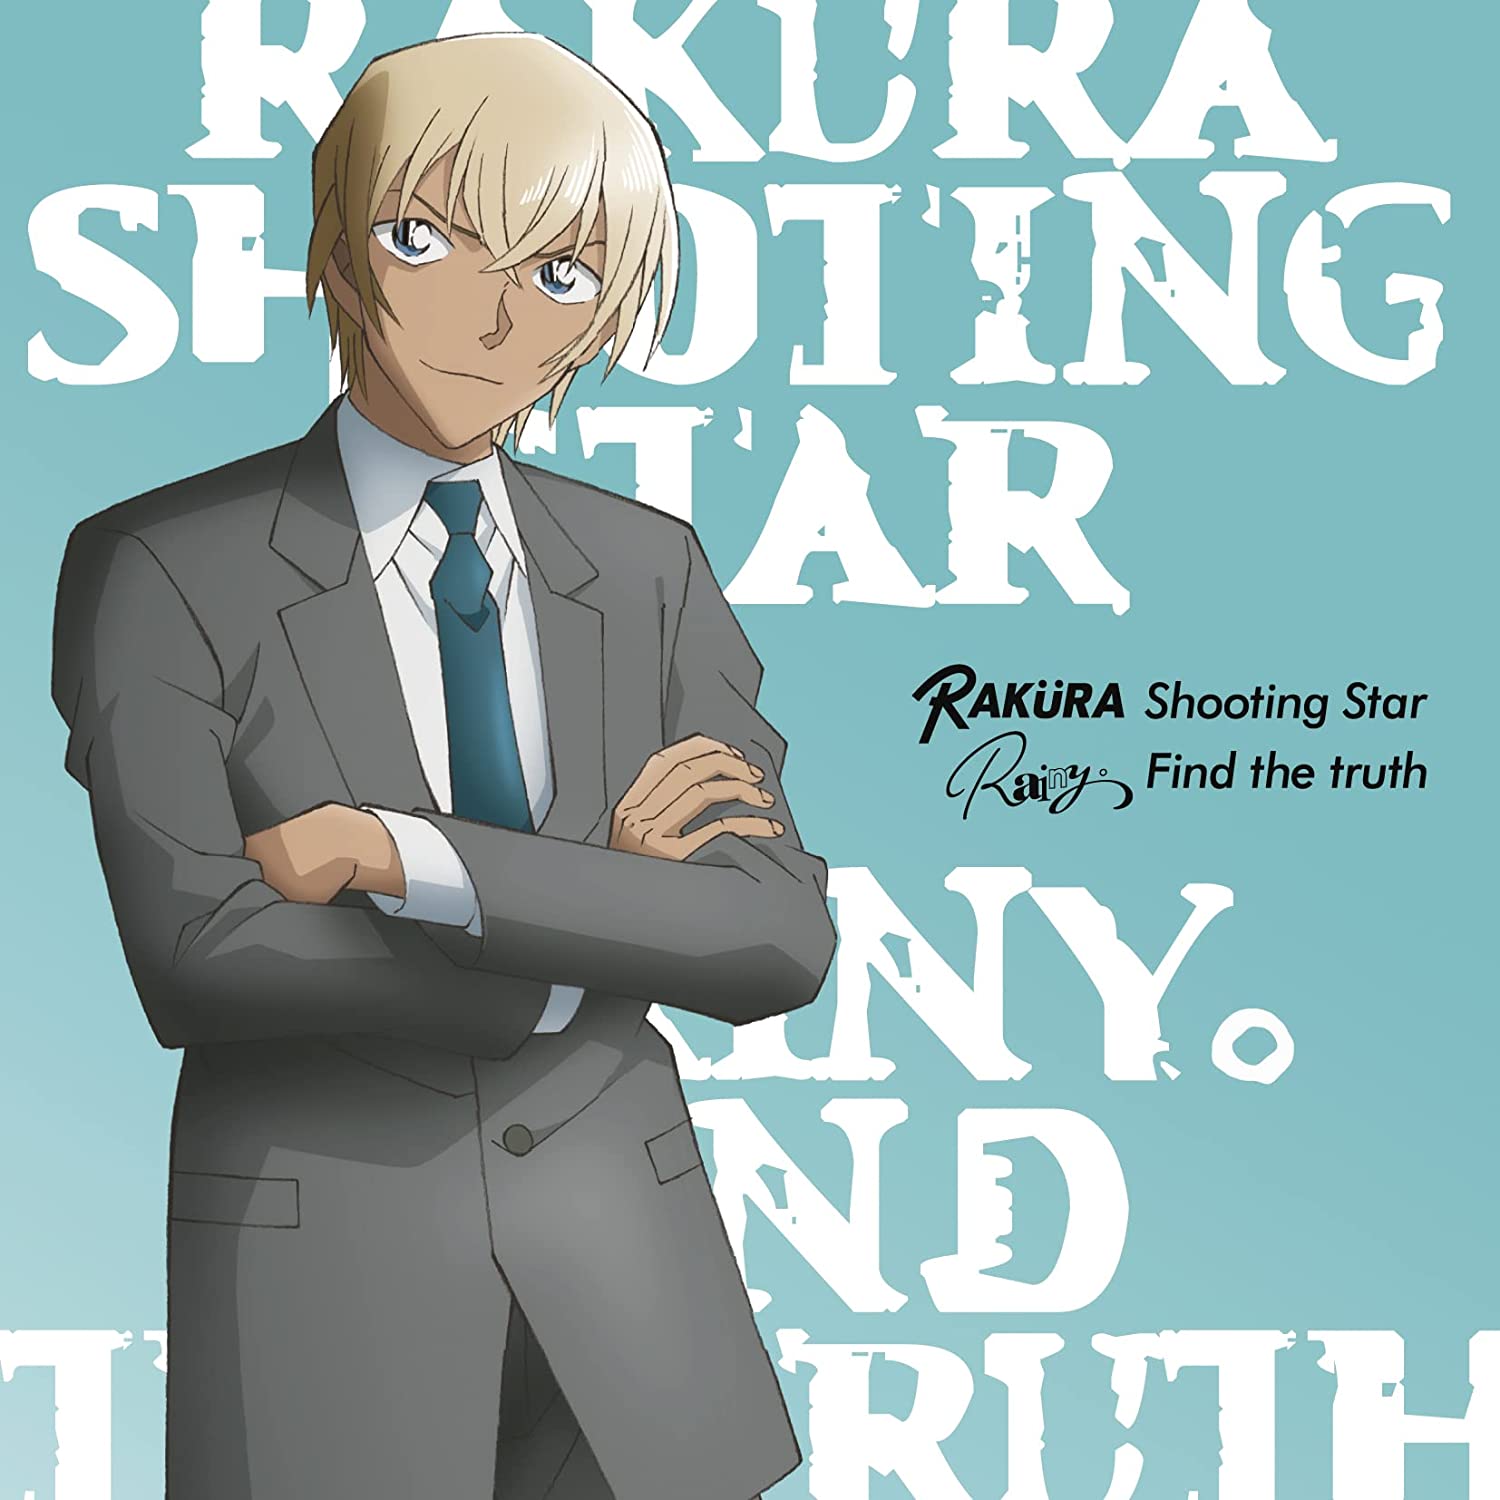 「Shooting Star / Find the truth」 (ゼロの日常盤A) 安室透描き下ろしオリジナルアクリルスタンドA(サイズ130×147mm)付